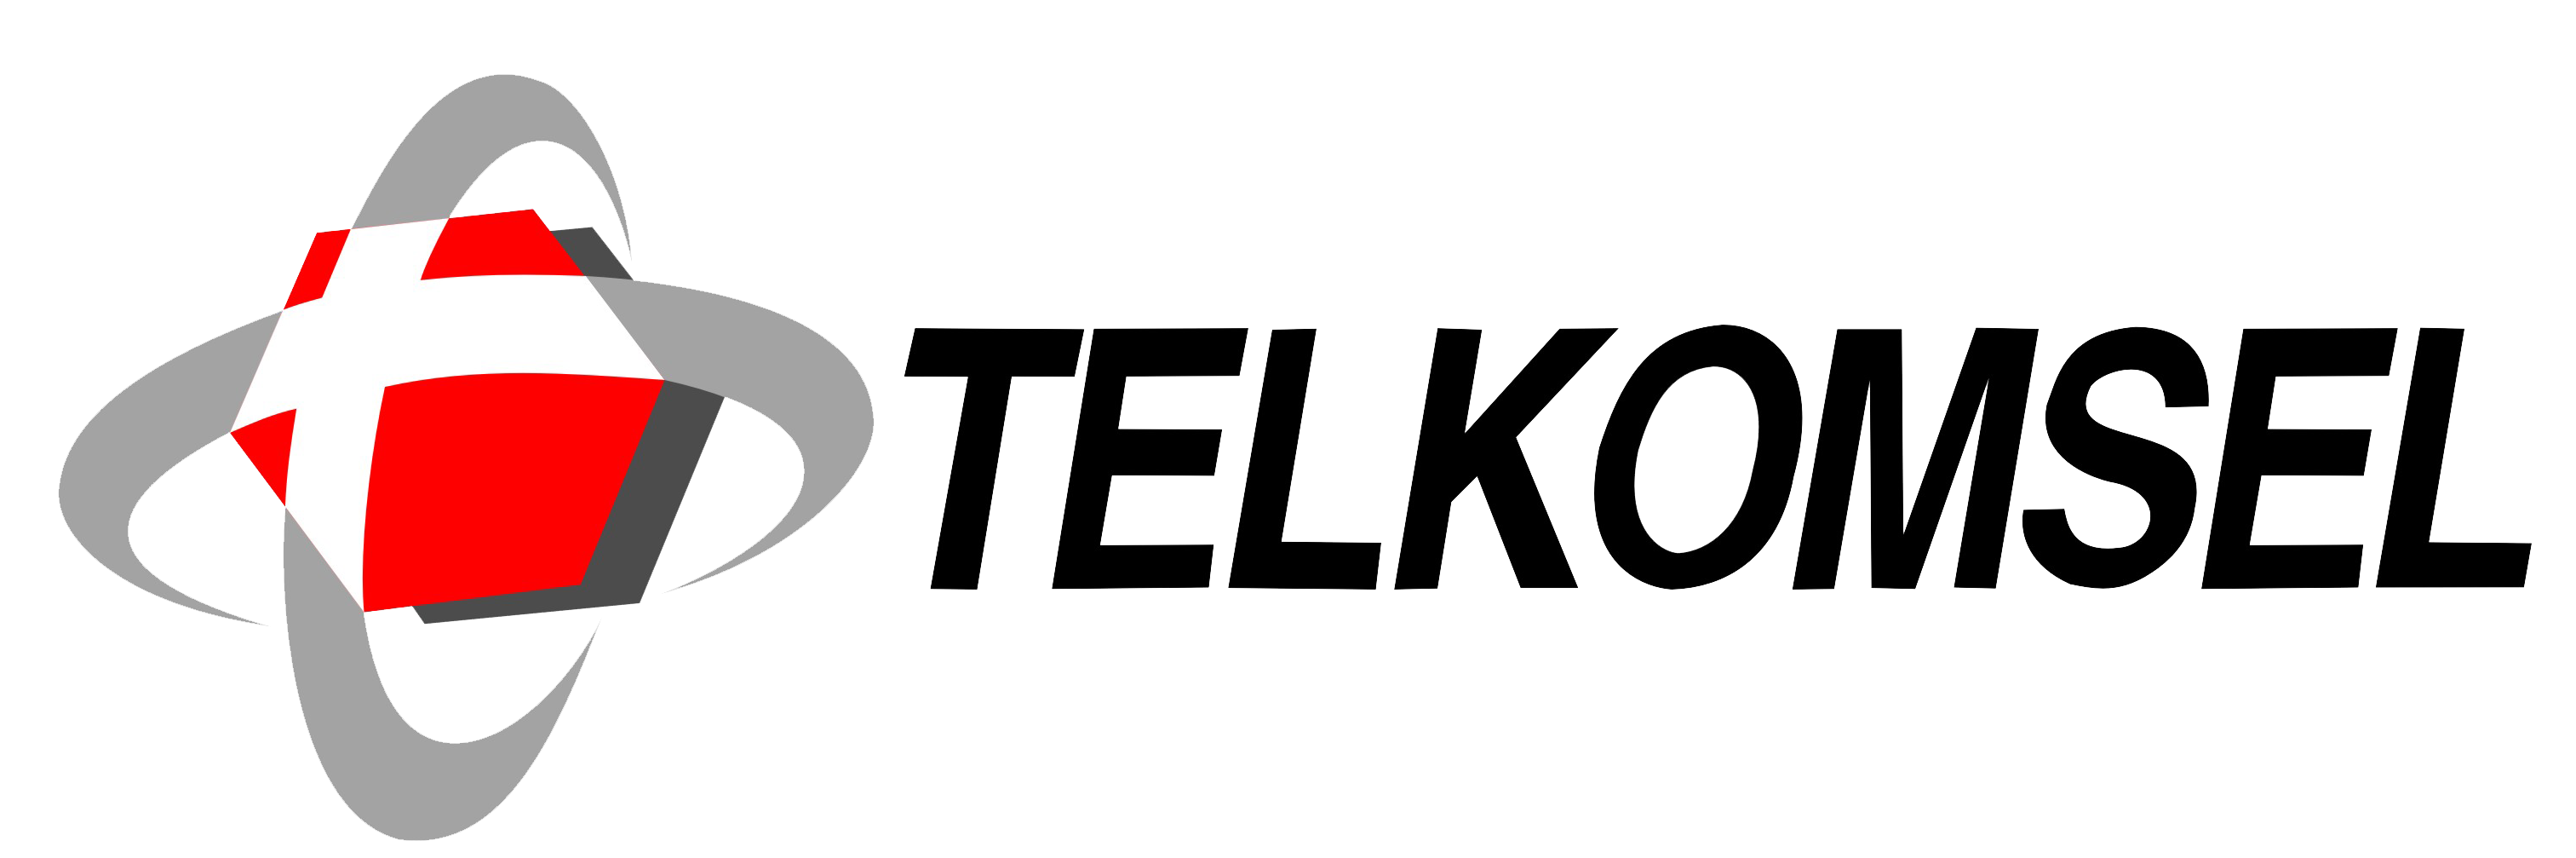 telkomsel communication logos #32578